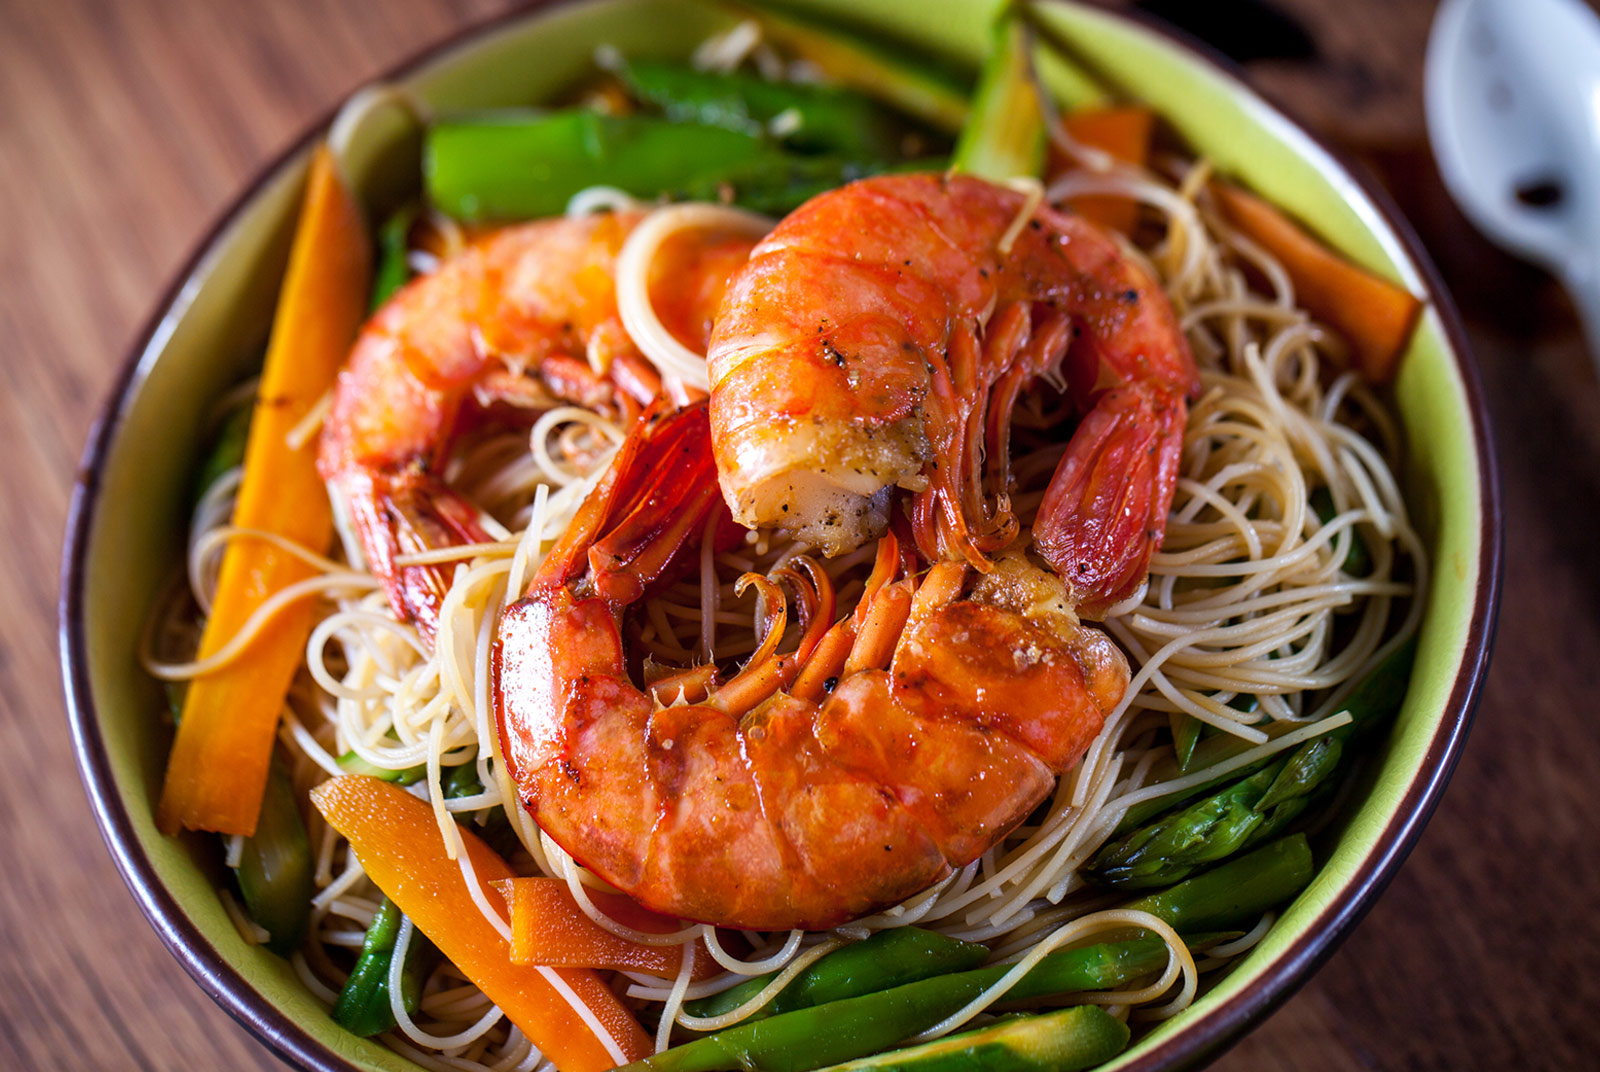 Seasonsed shrimp with carrots, asparagus and angel hair pasta